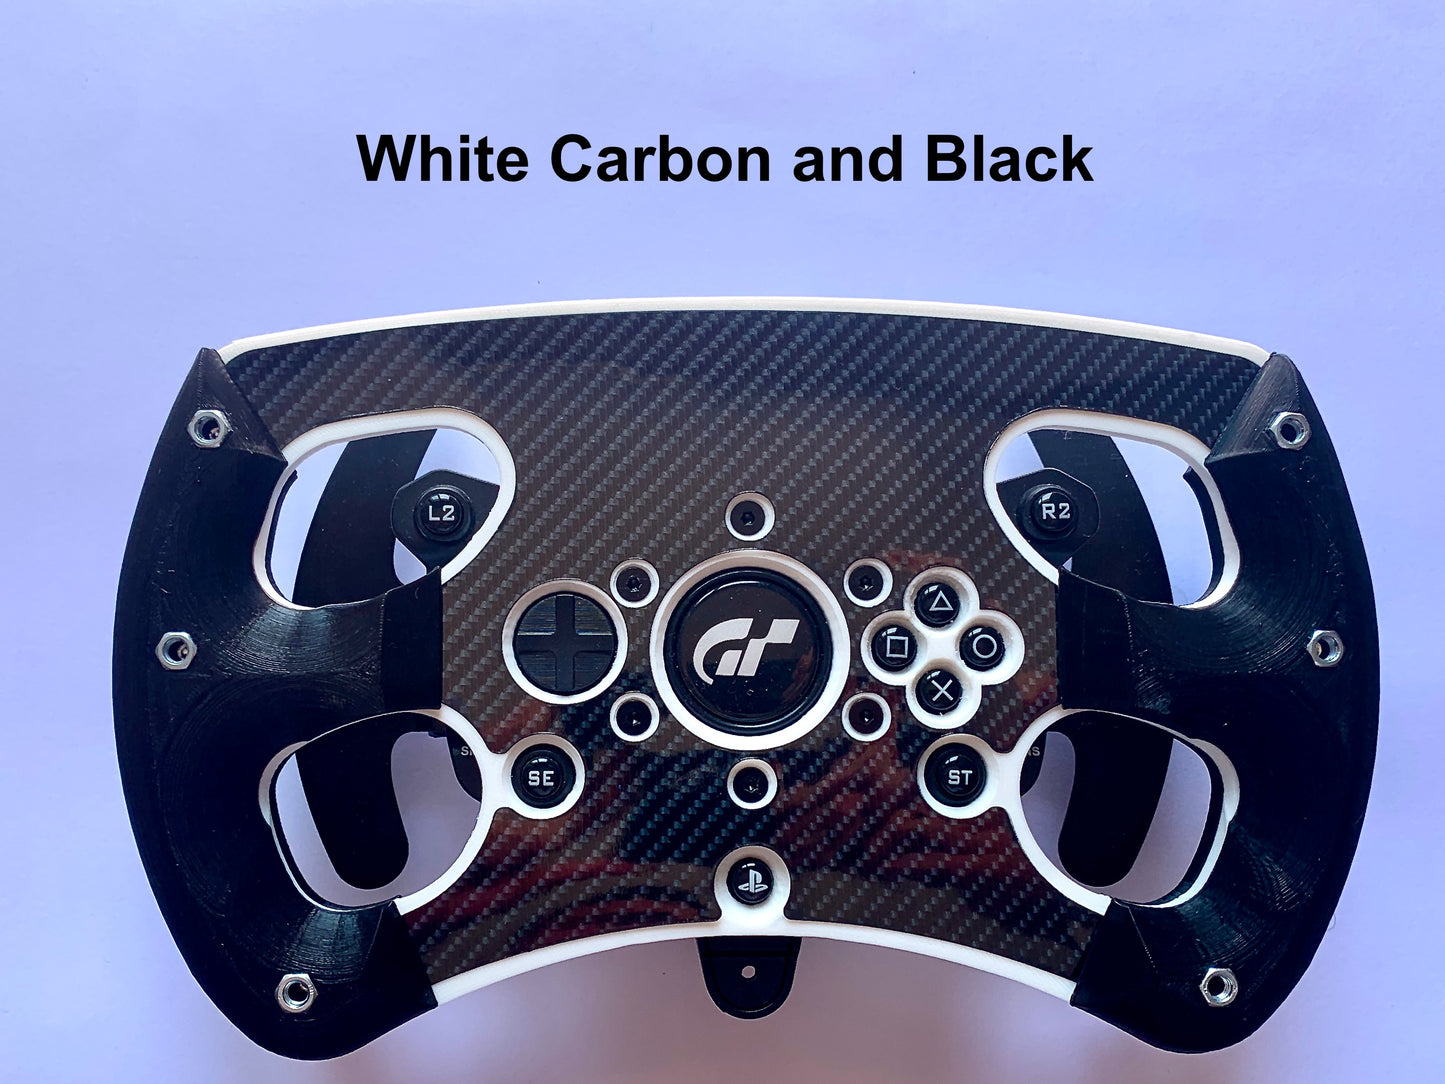 White Version GT Open Wheel Mod for Thrustmaster T300